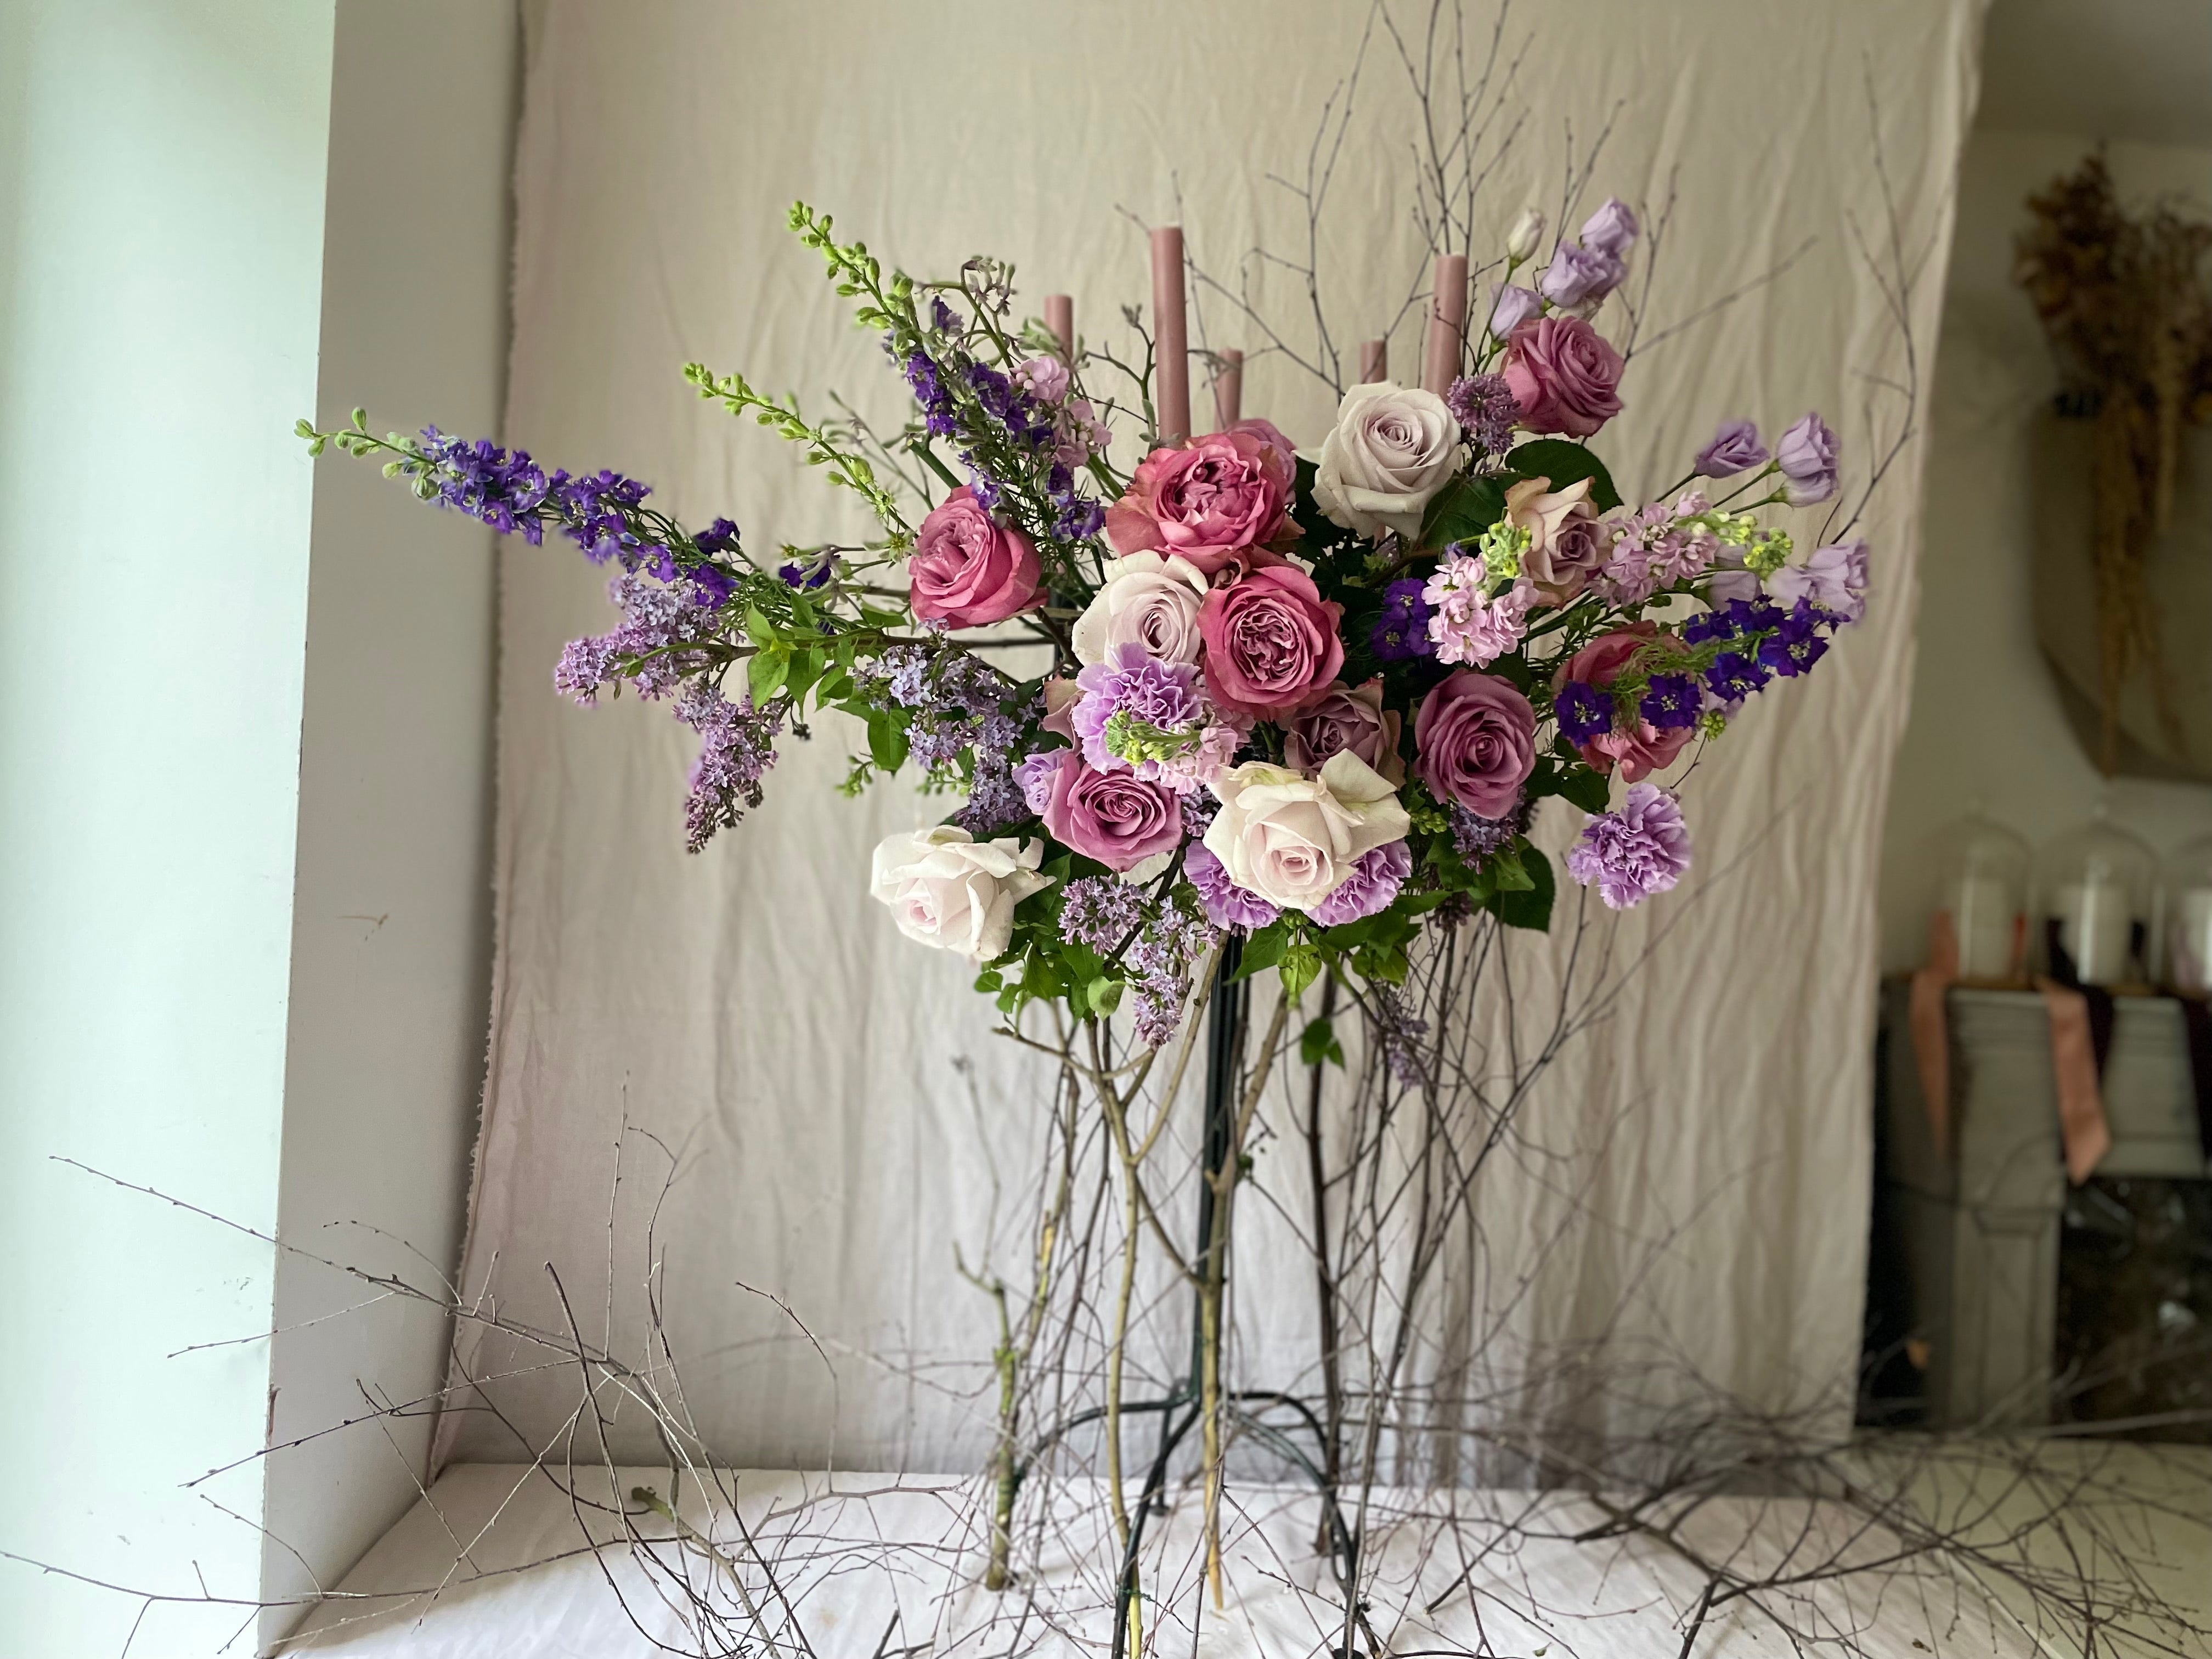 Grand Flower Arrangements